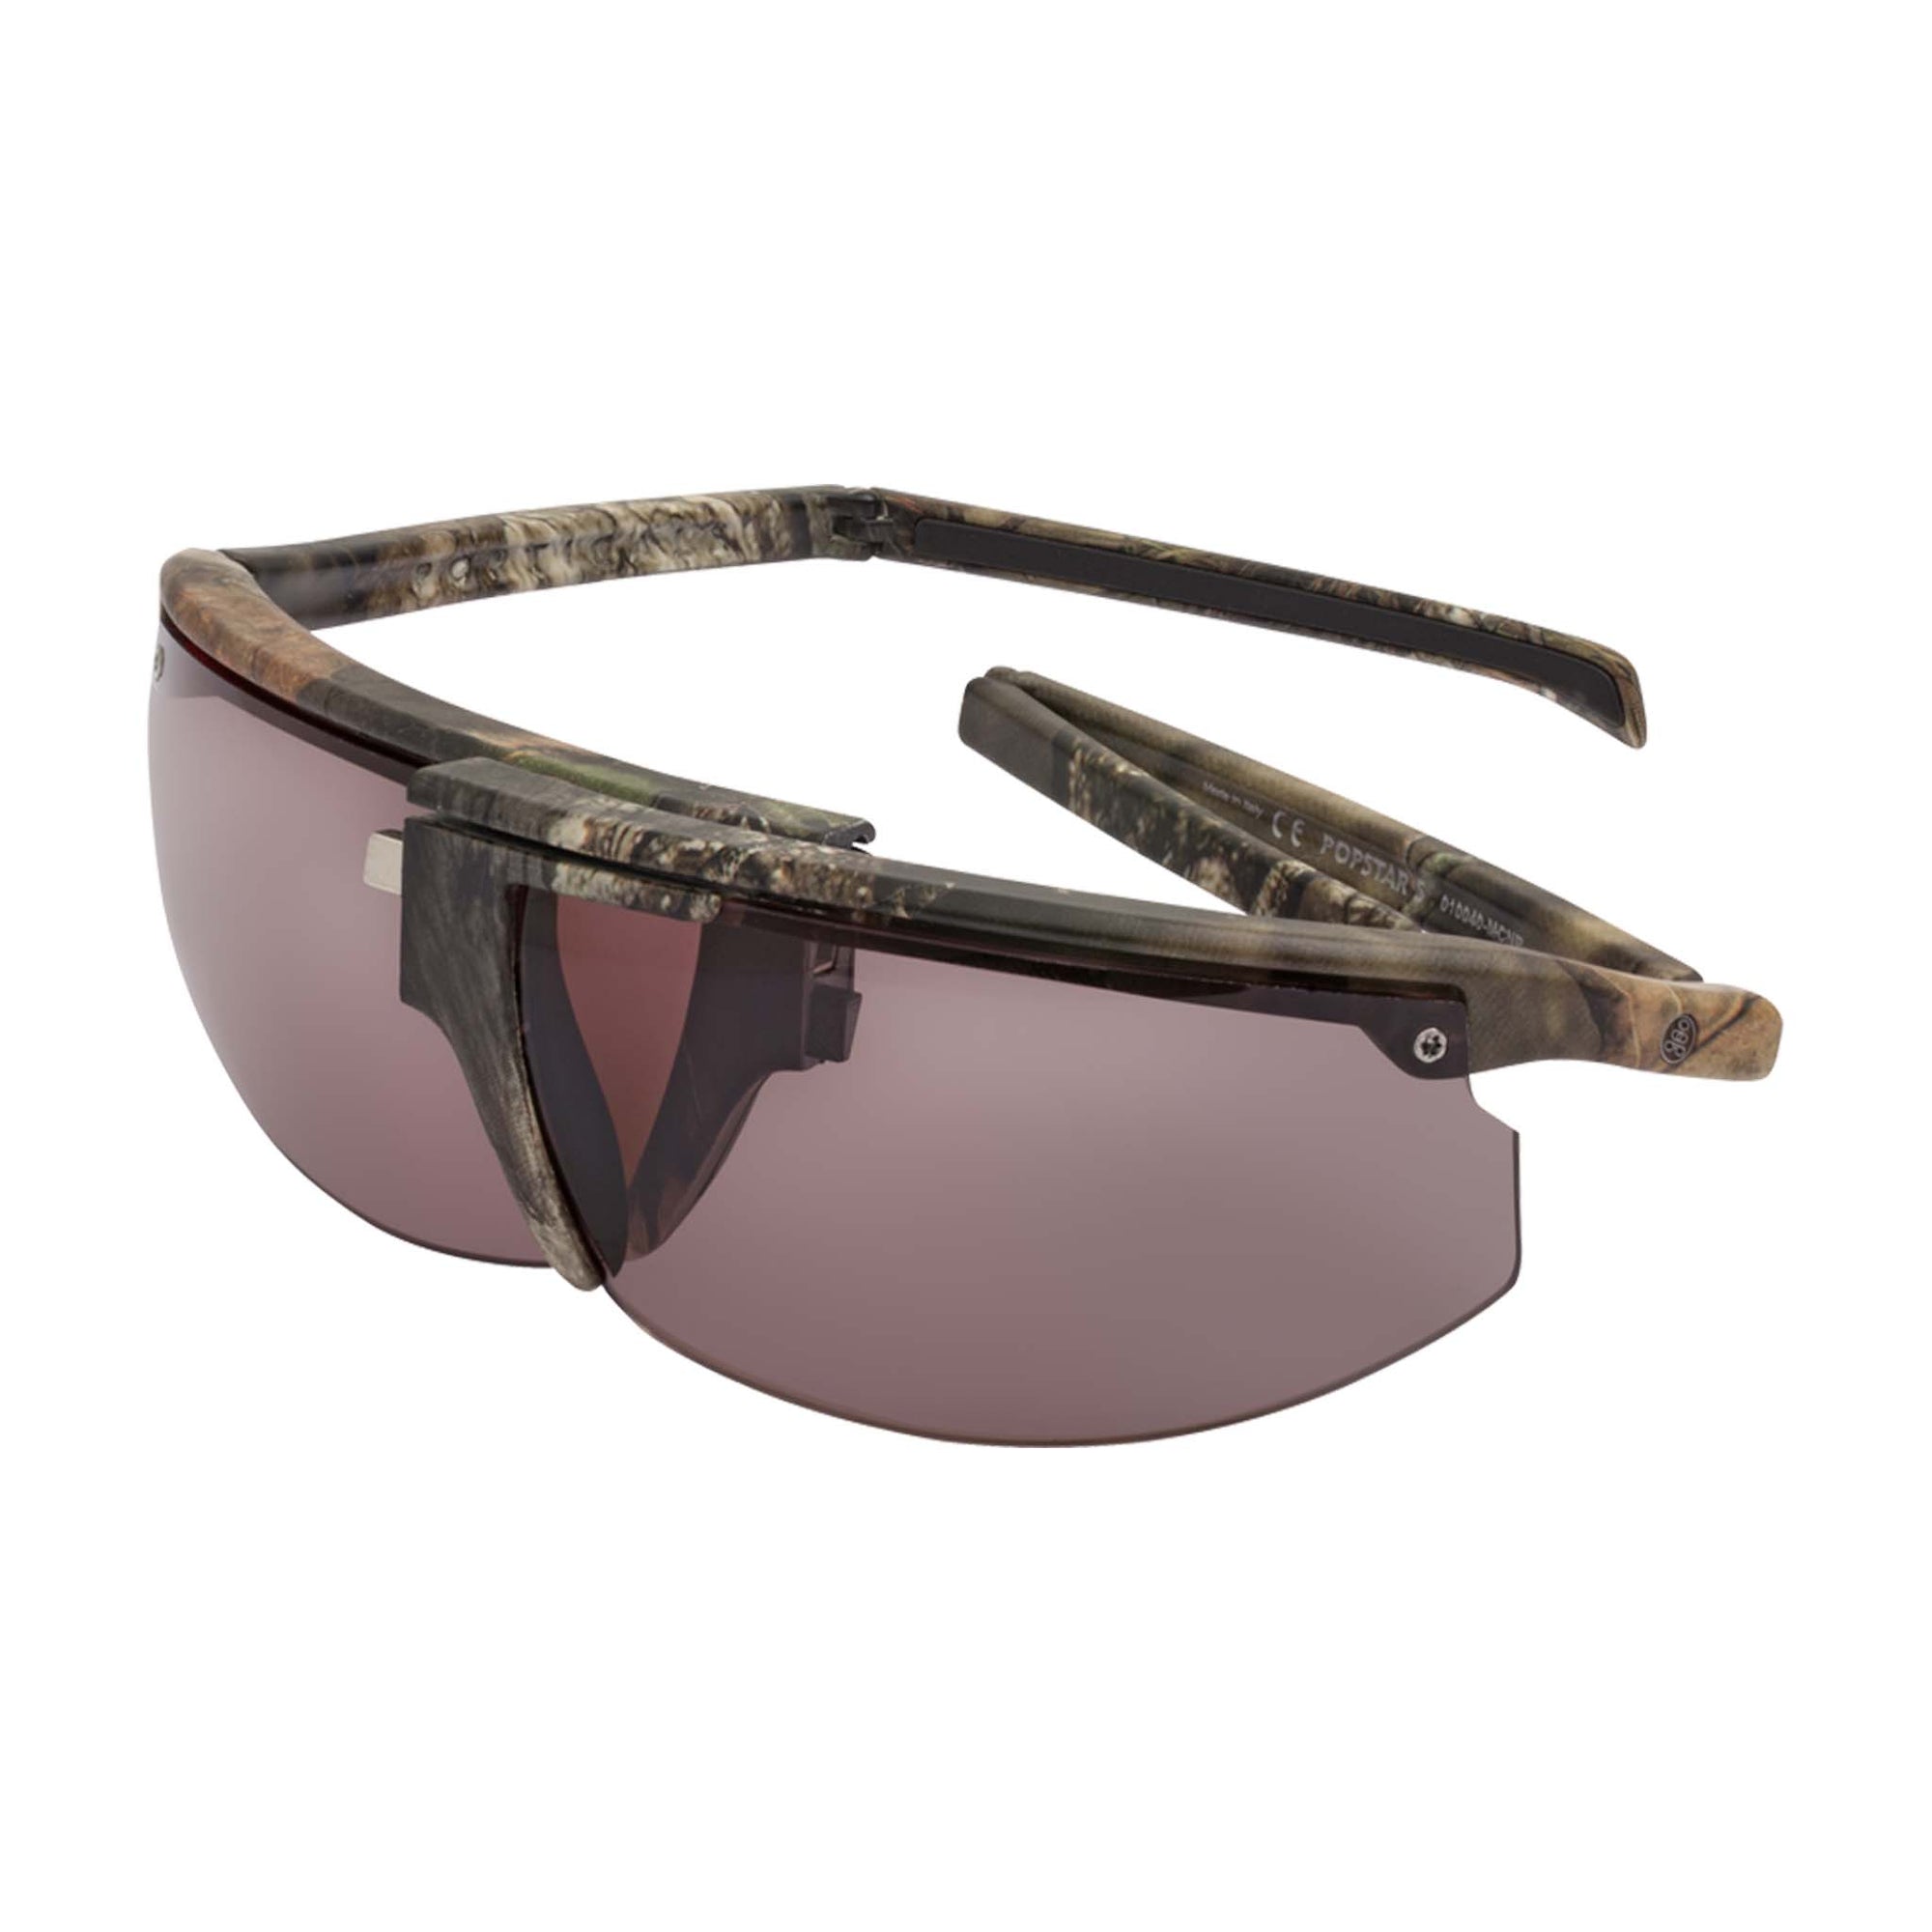 Popticals, Premium Compact Sunglasses, PopStar, 010040-MCNP, Polarized Sunglasses, Matte Mossy Oak Break-Up Frame, Brown Lenses, Spider View